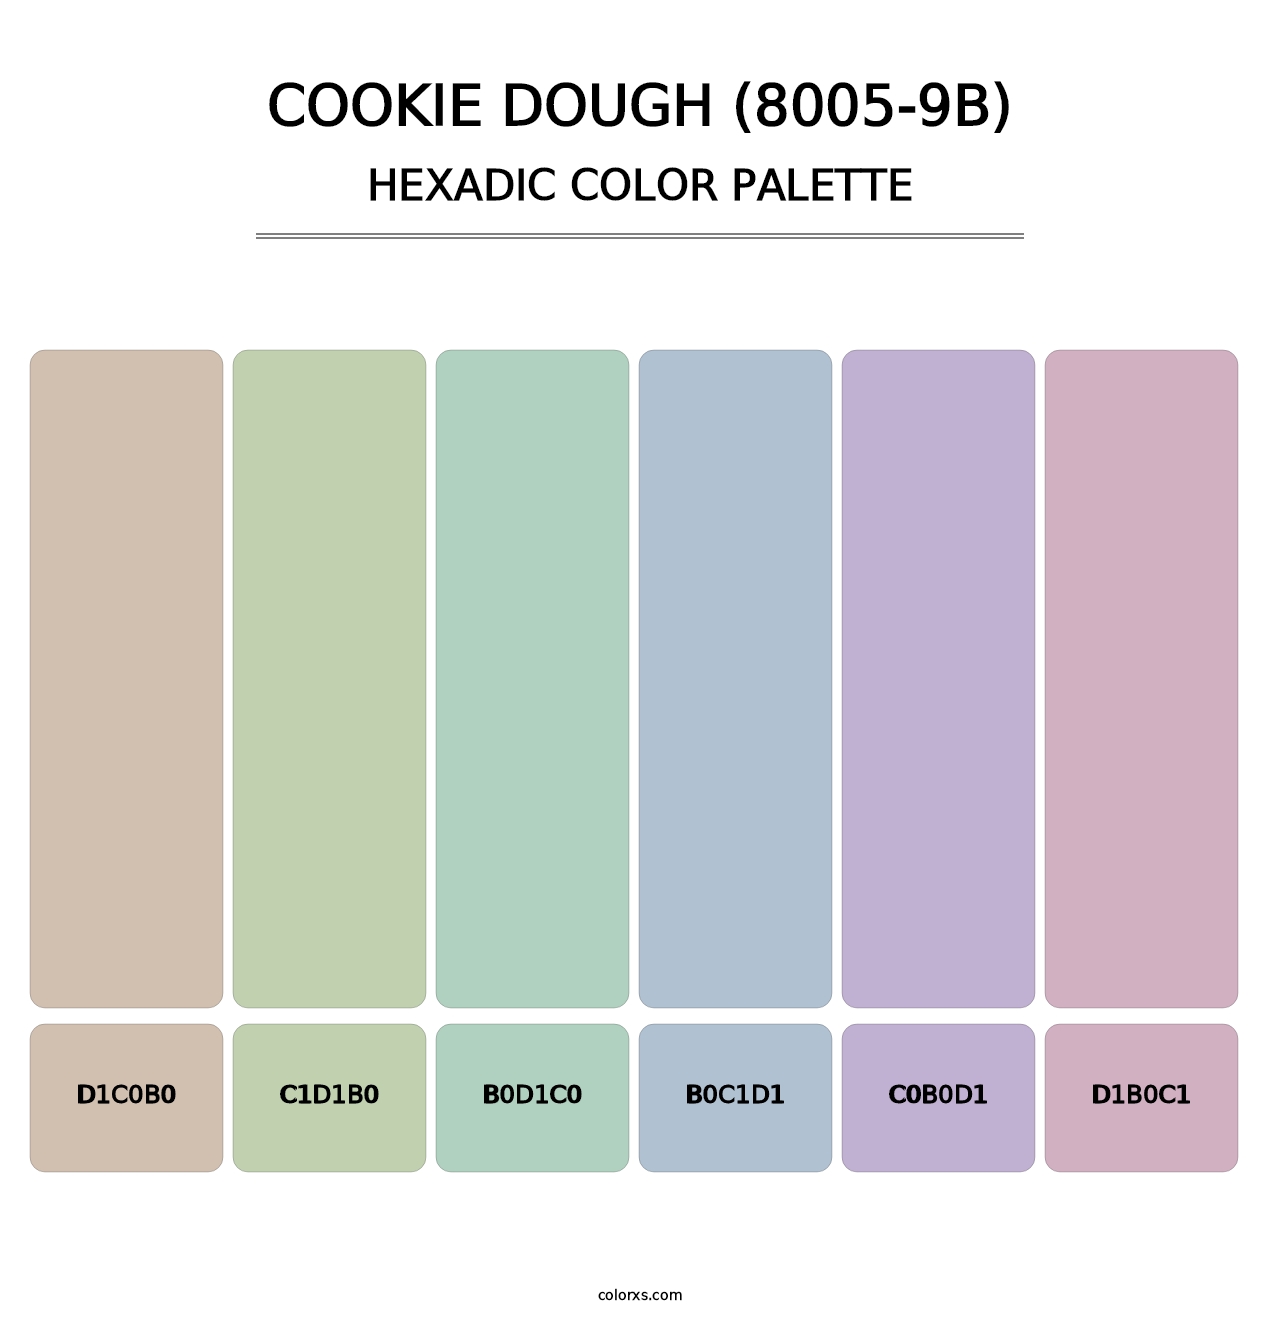 Cookie Dough (8005-9B) - Hexadic Color Palette